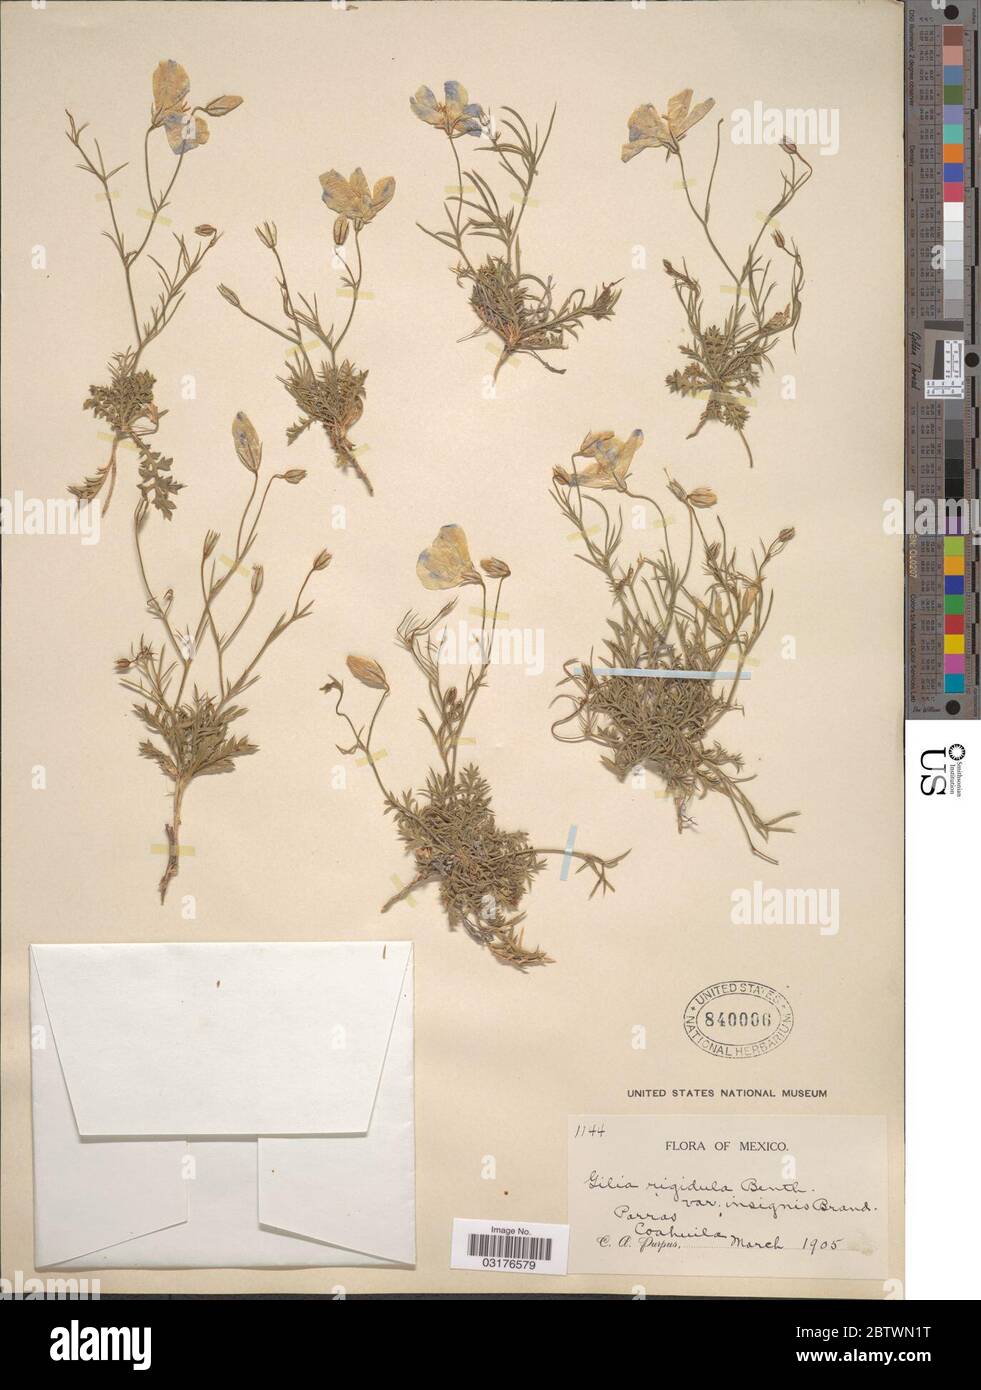 Gilia rigidula Benth. Stock Photo